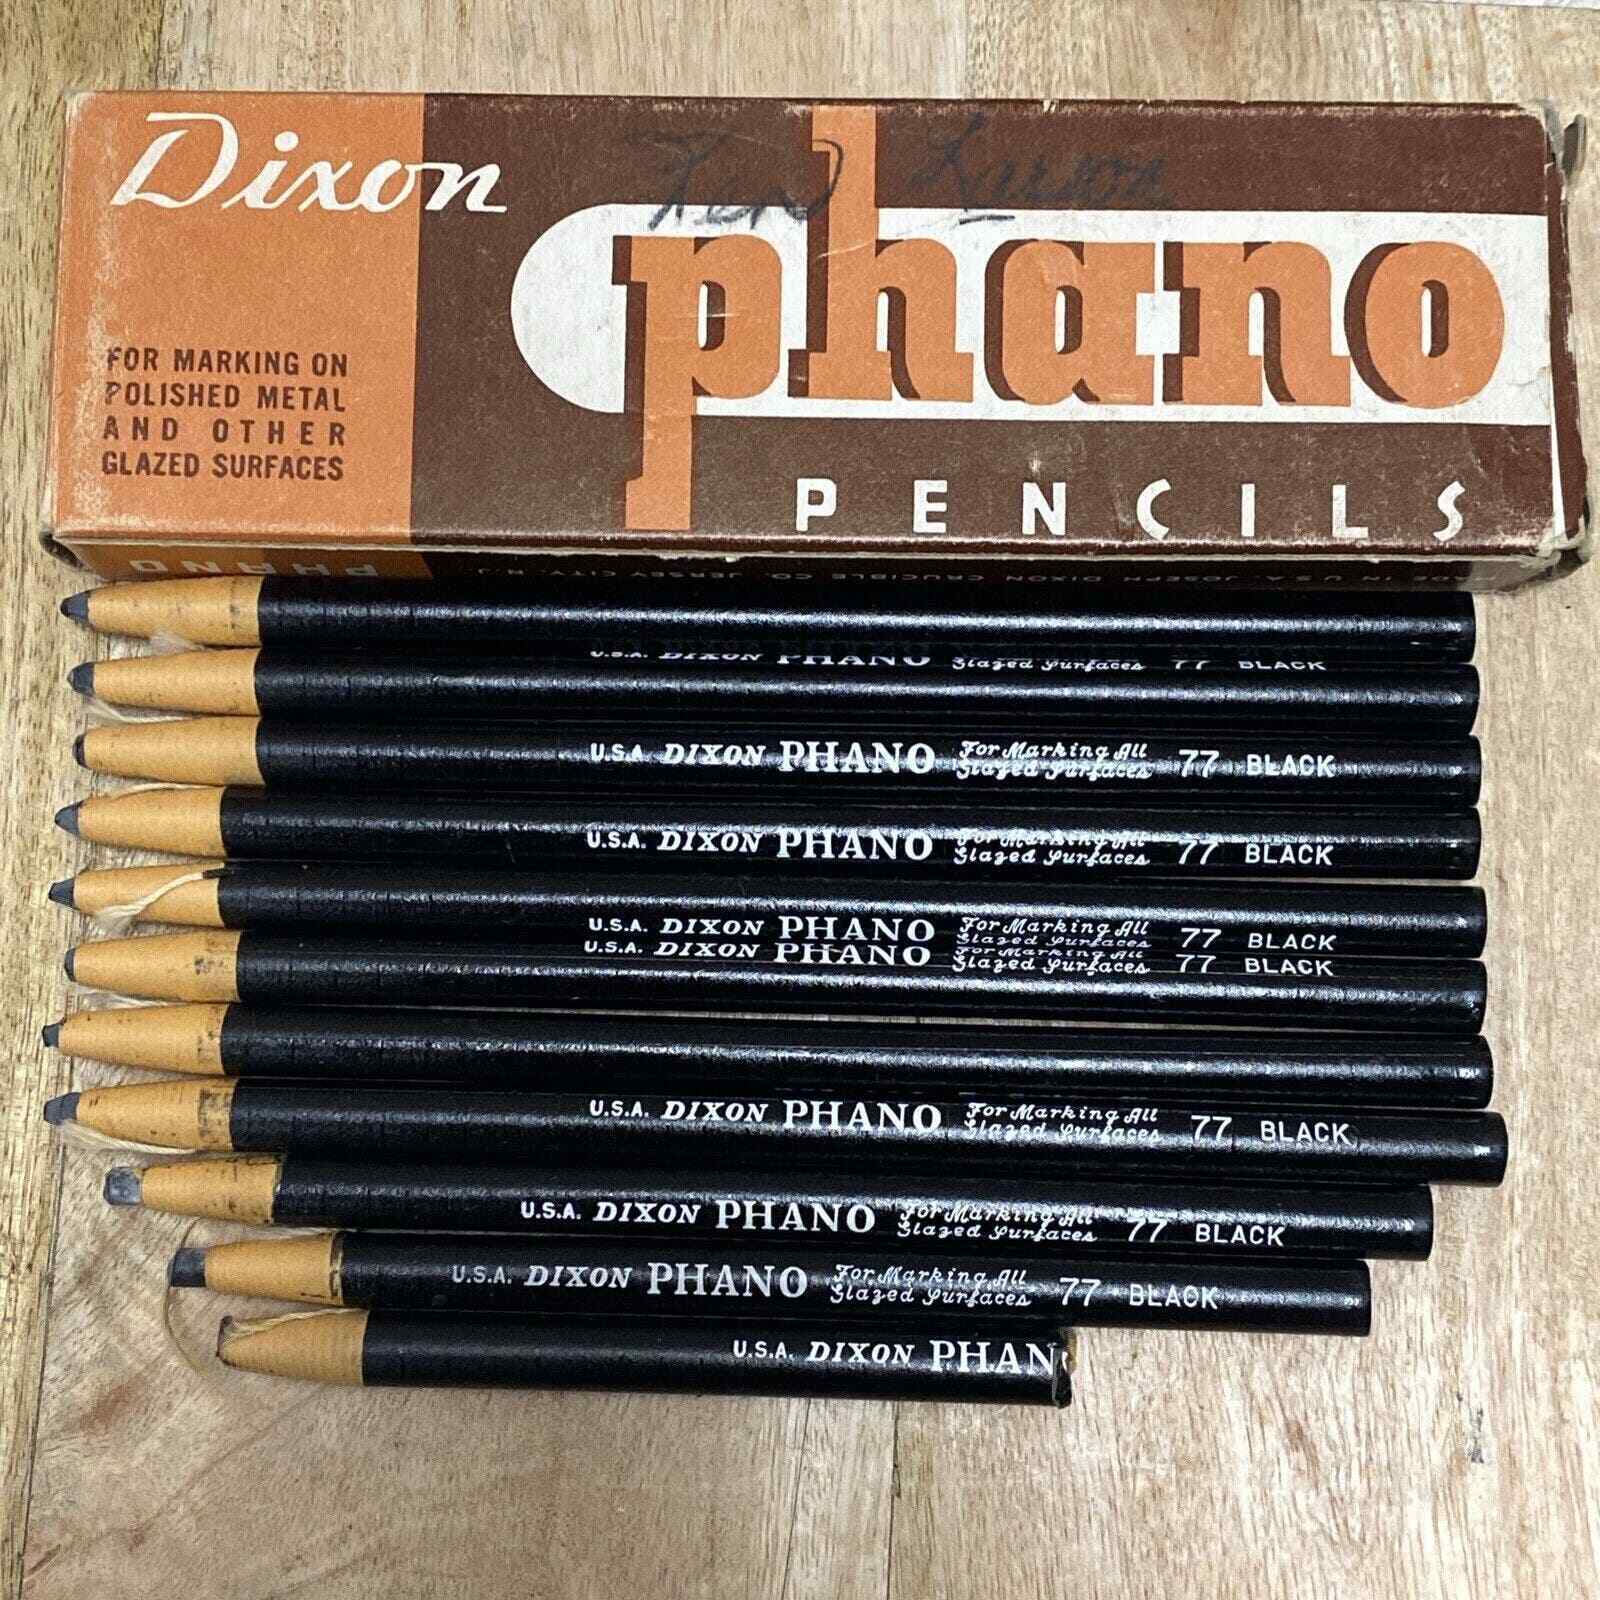 Vintage Dixon Industrial Phano Pencils 77 Black Glazed And Polished Surface Mark